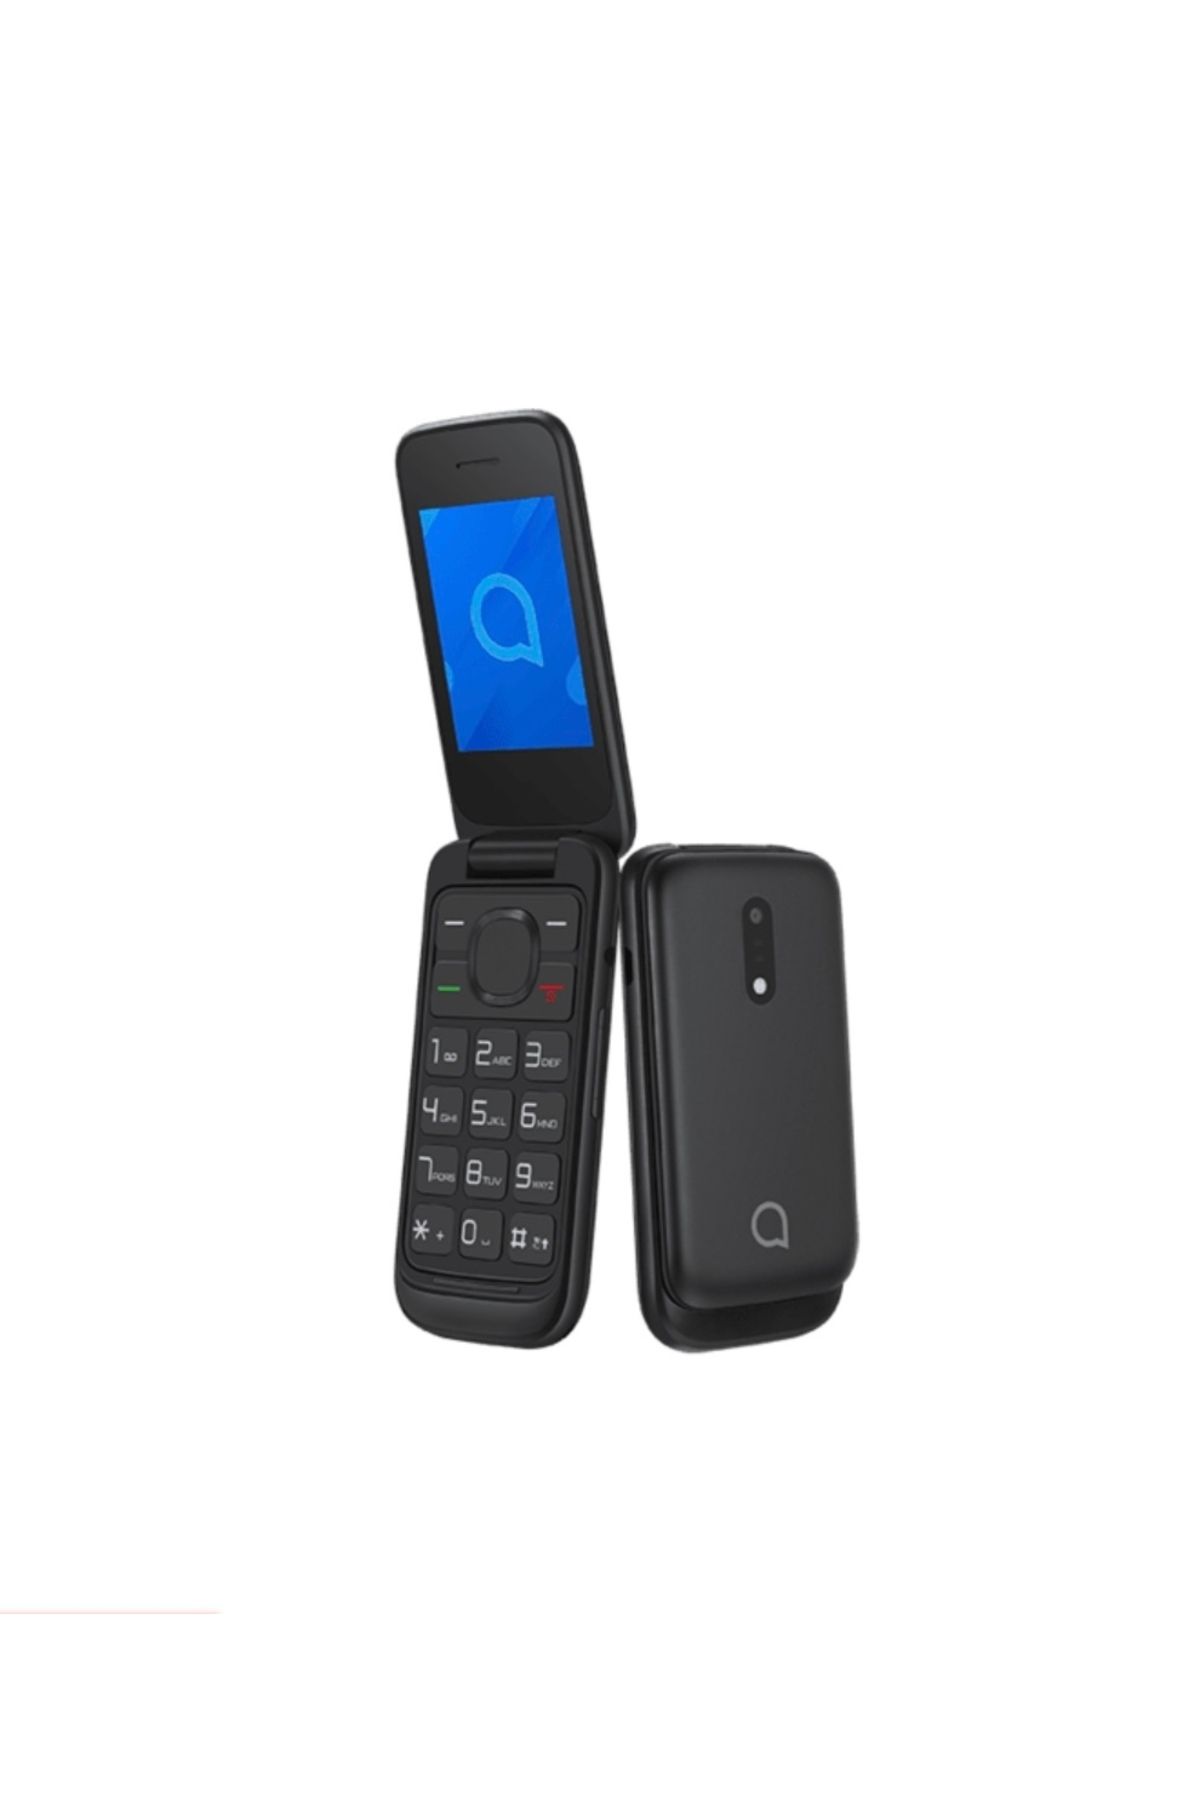 Alcatel 2057d aktif kapaklı, tuşlu cep telefonu (KVK garantili)